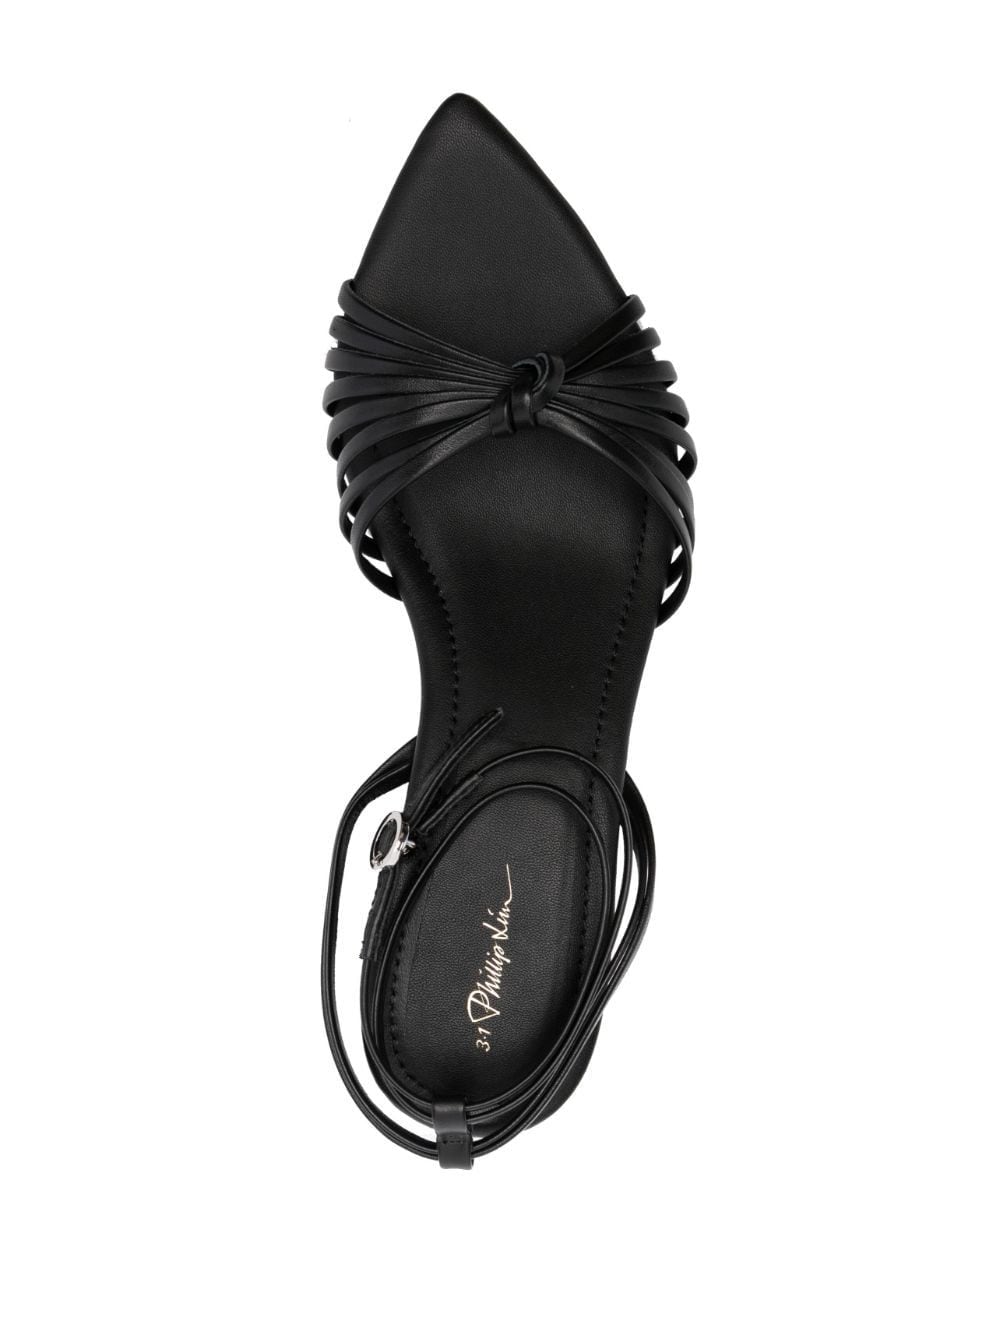 3.1 Phillip Lim Verona 60mm Leather Sandals - Farfetch